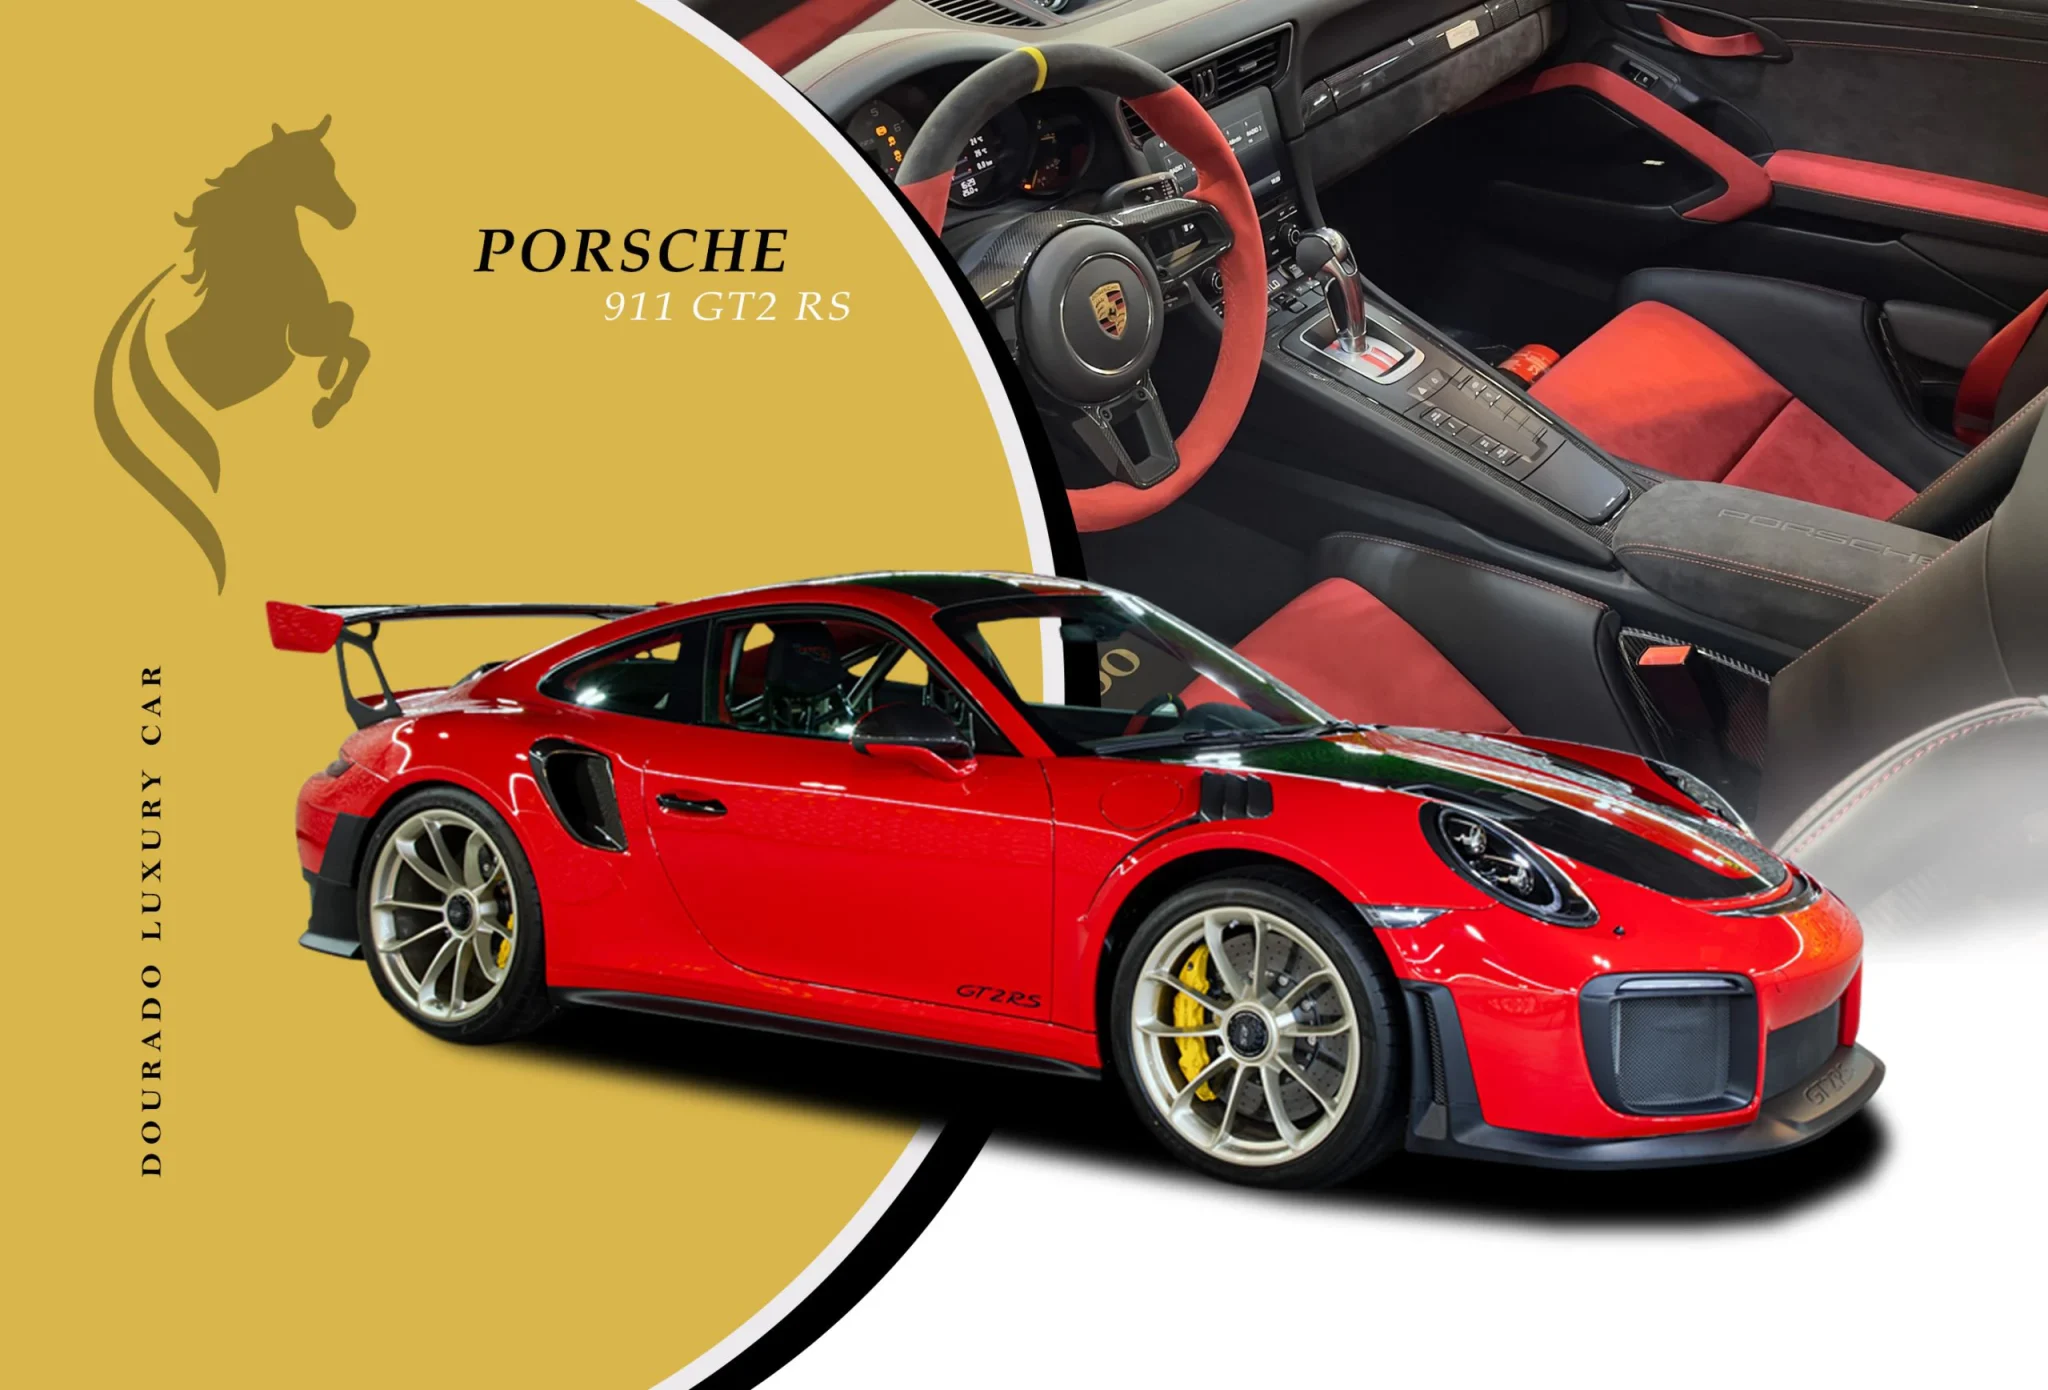 Porsche 911 GT2 RS for Sale in Dubai